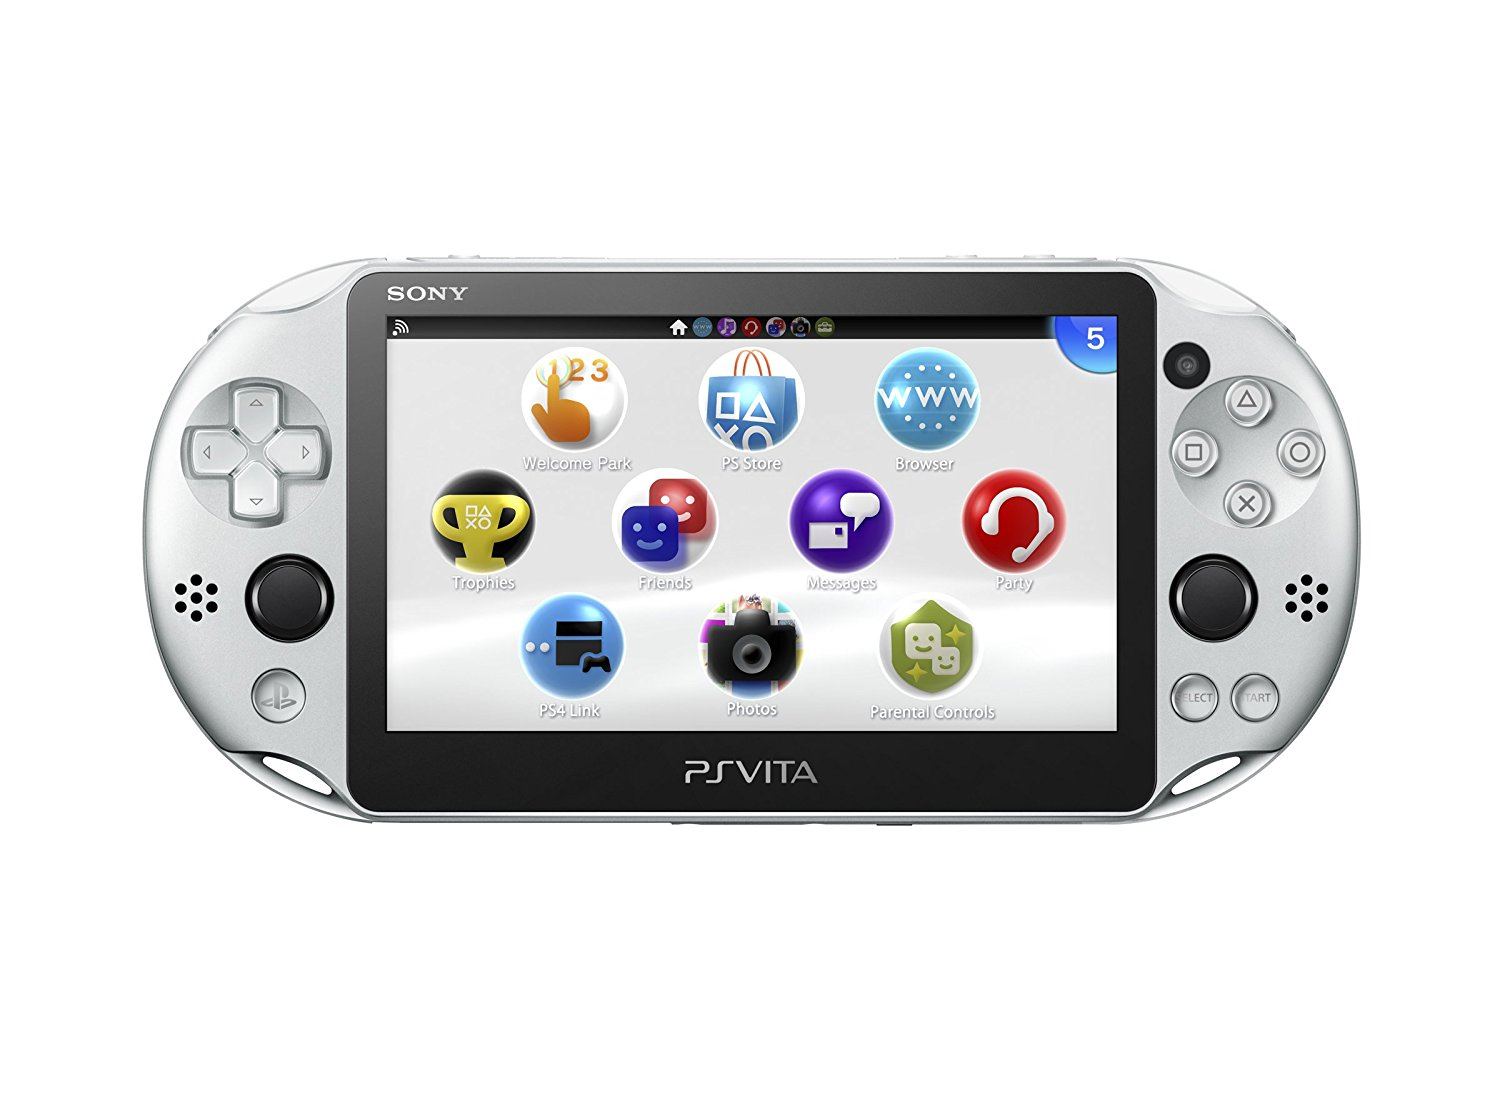 PS Vita PlayStation Vita New Slim Model - PCH-2000 (Silver) (Japan)